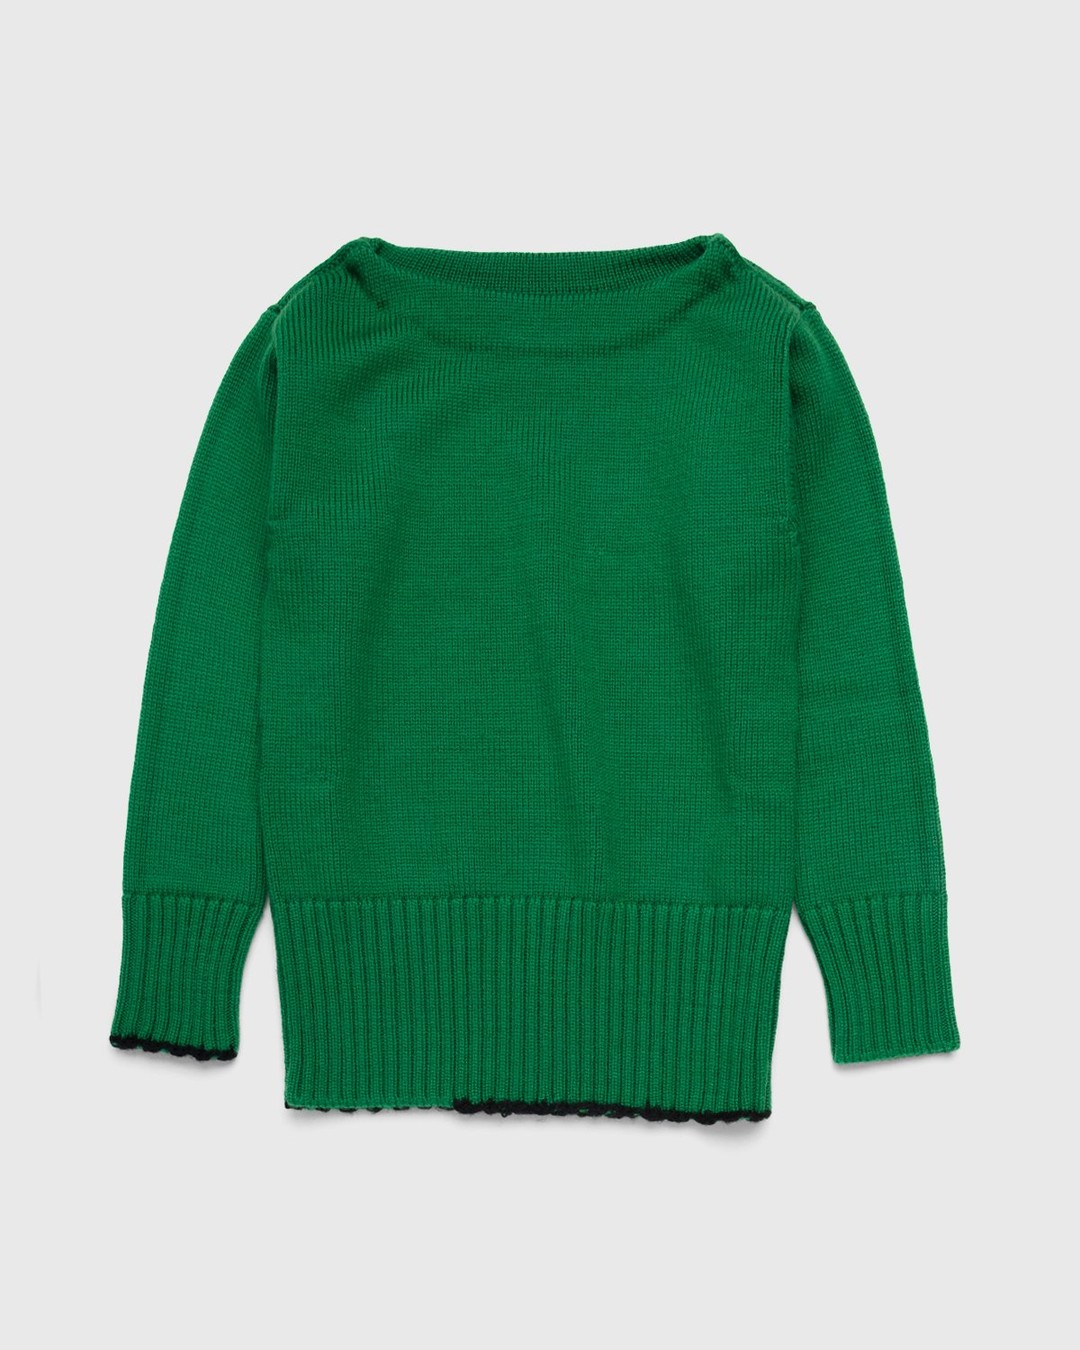 Maison Margiela – Summer Camp Sweater Green - Knitwear - Green - Image 1